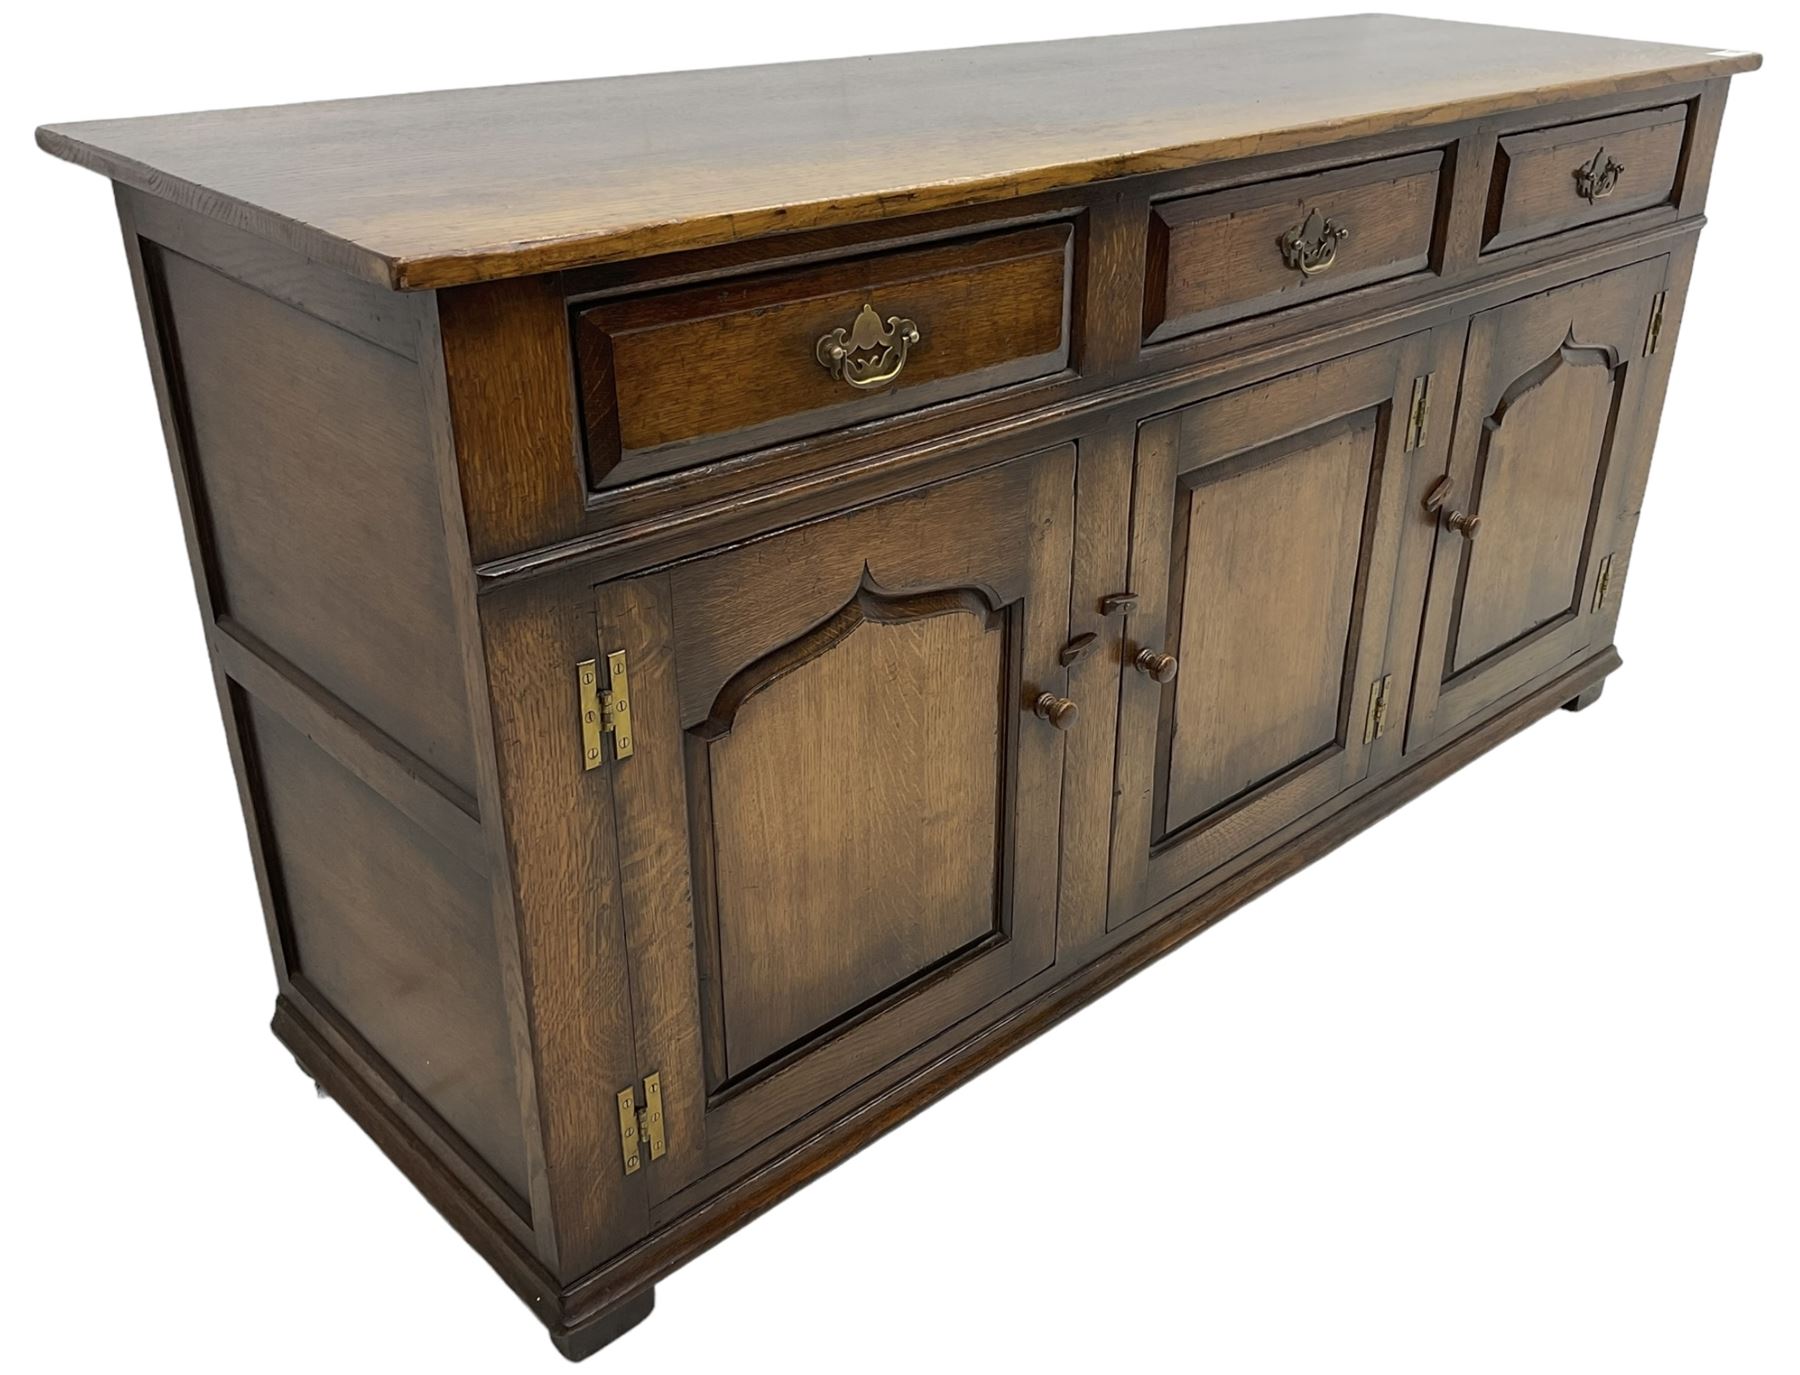 Titchmarsh & Goodwin - traditional oak dresser base - Image 5 of 9